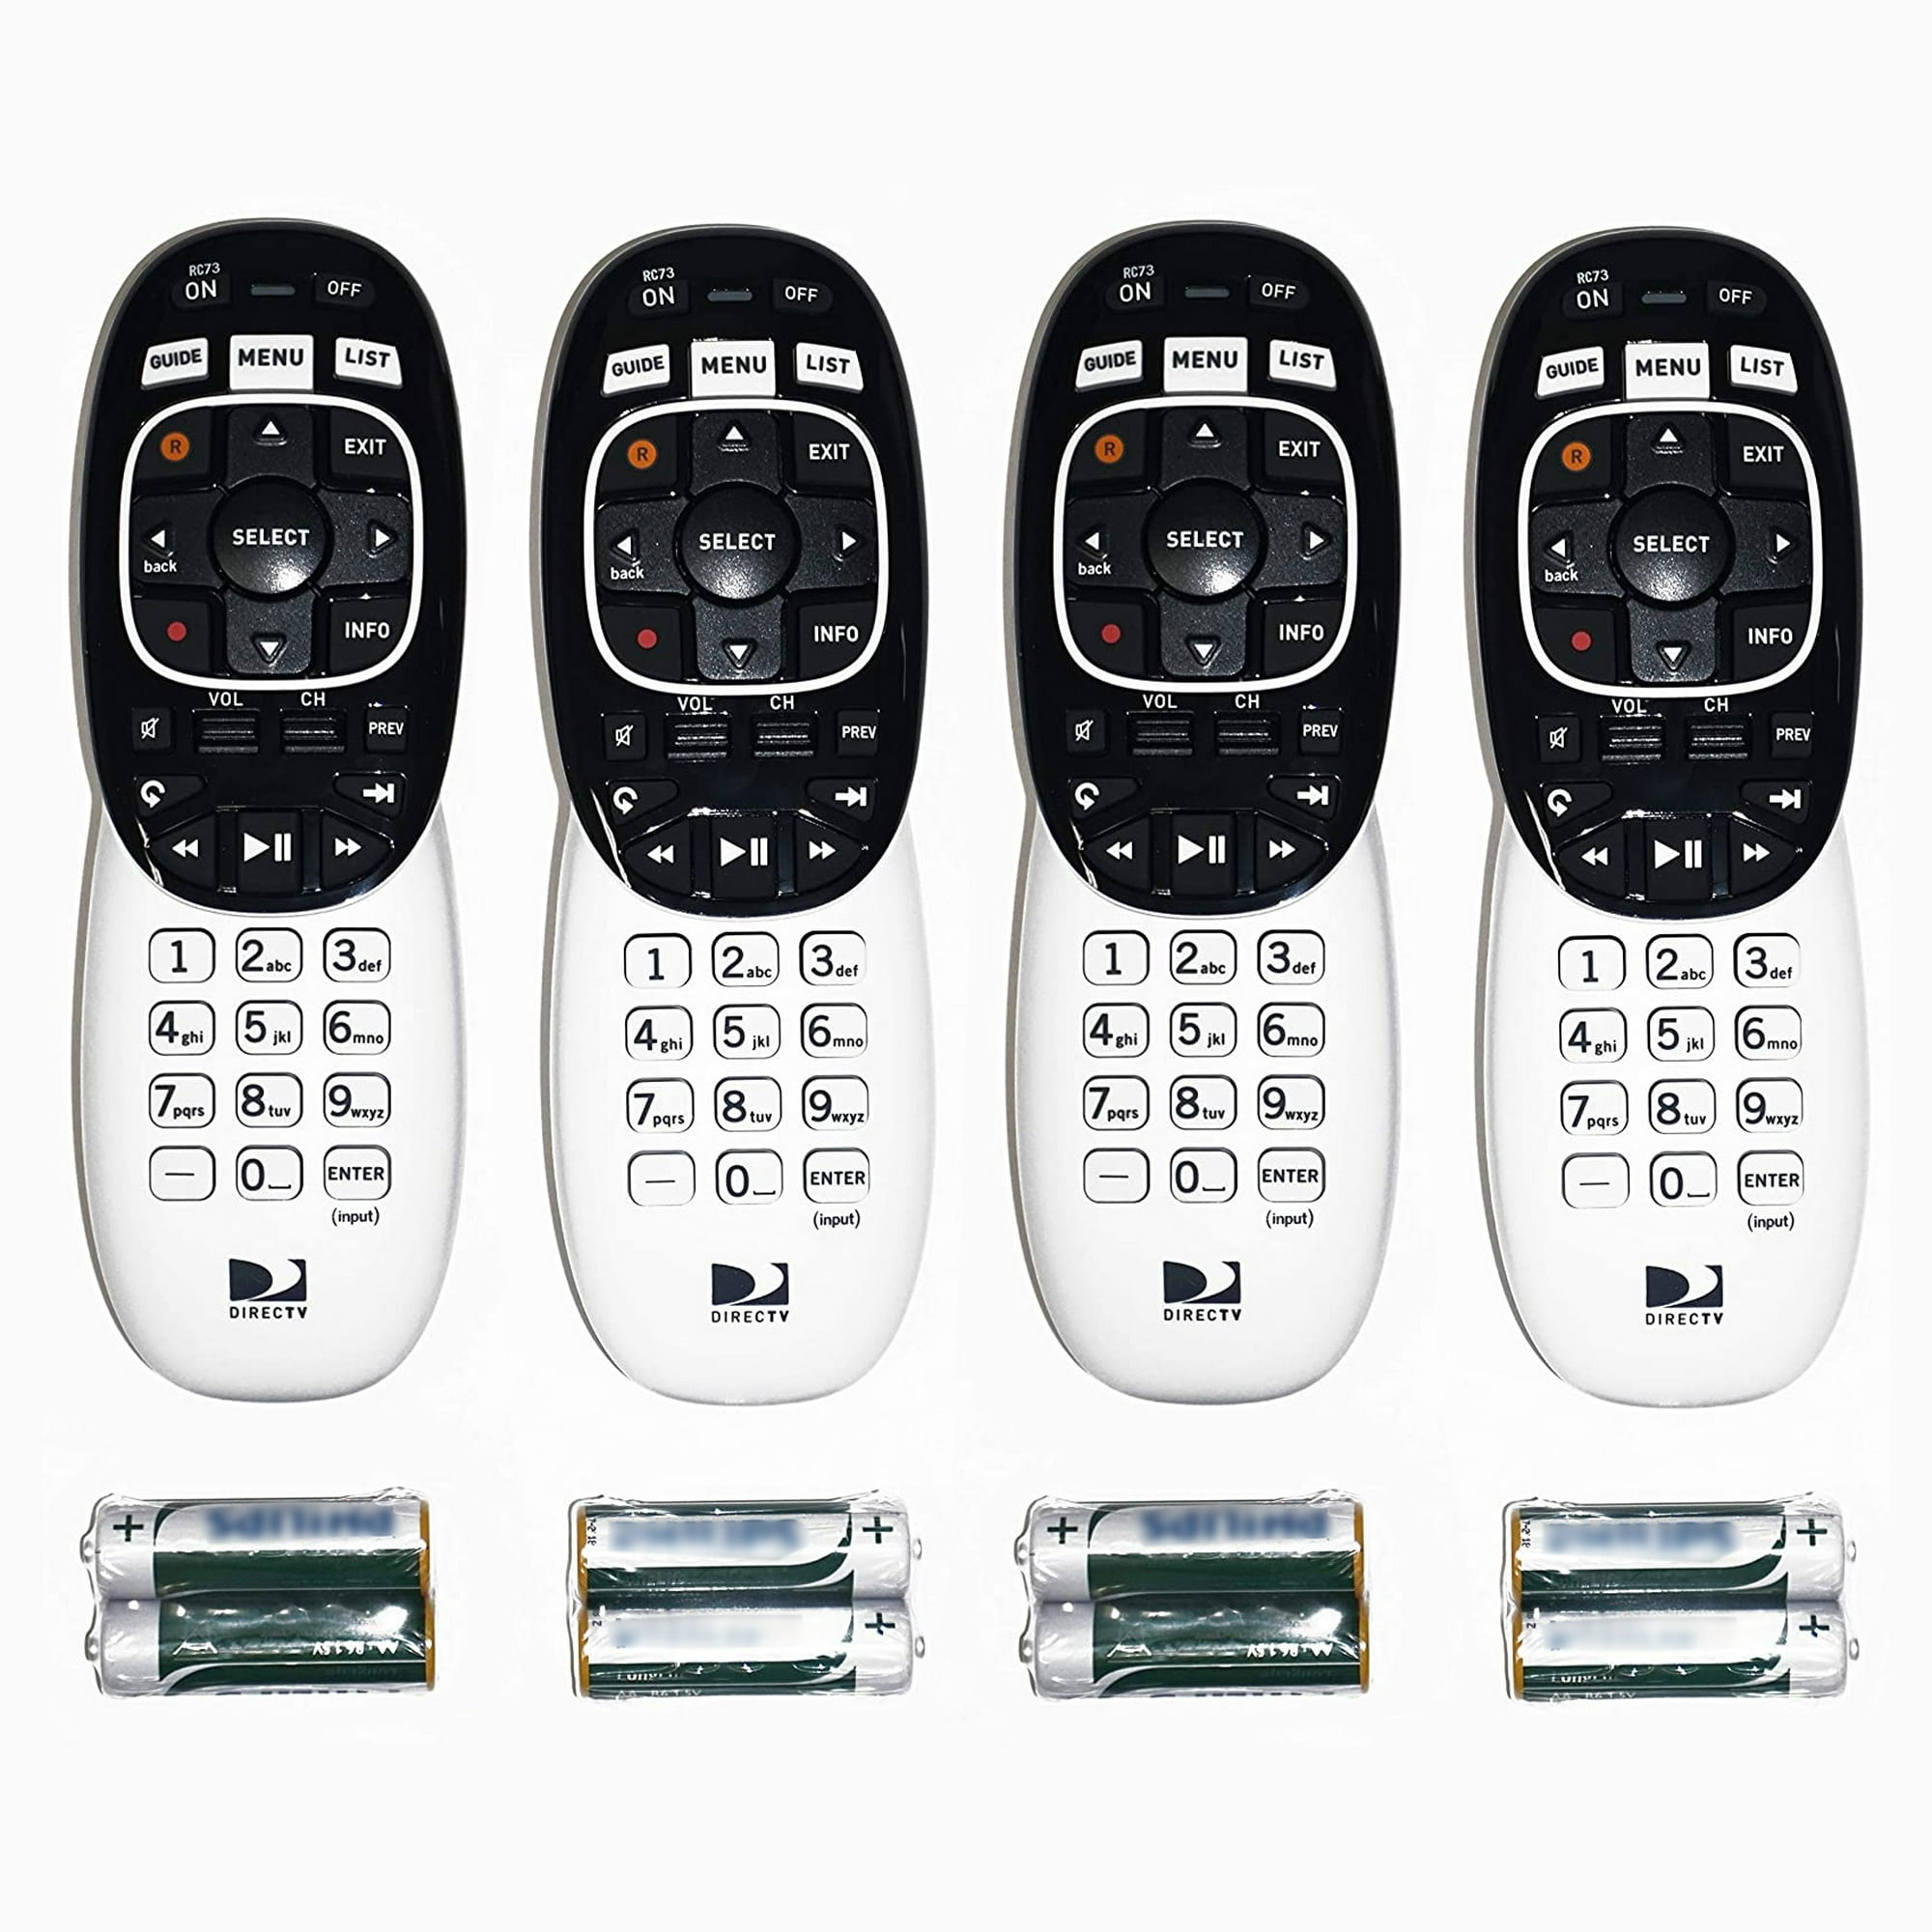 Control Para Pantalla Panasonic Smart Tv Rc1008 Funda Incluida Panasonic  Mando a distancia